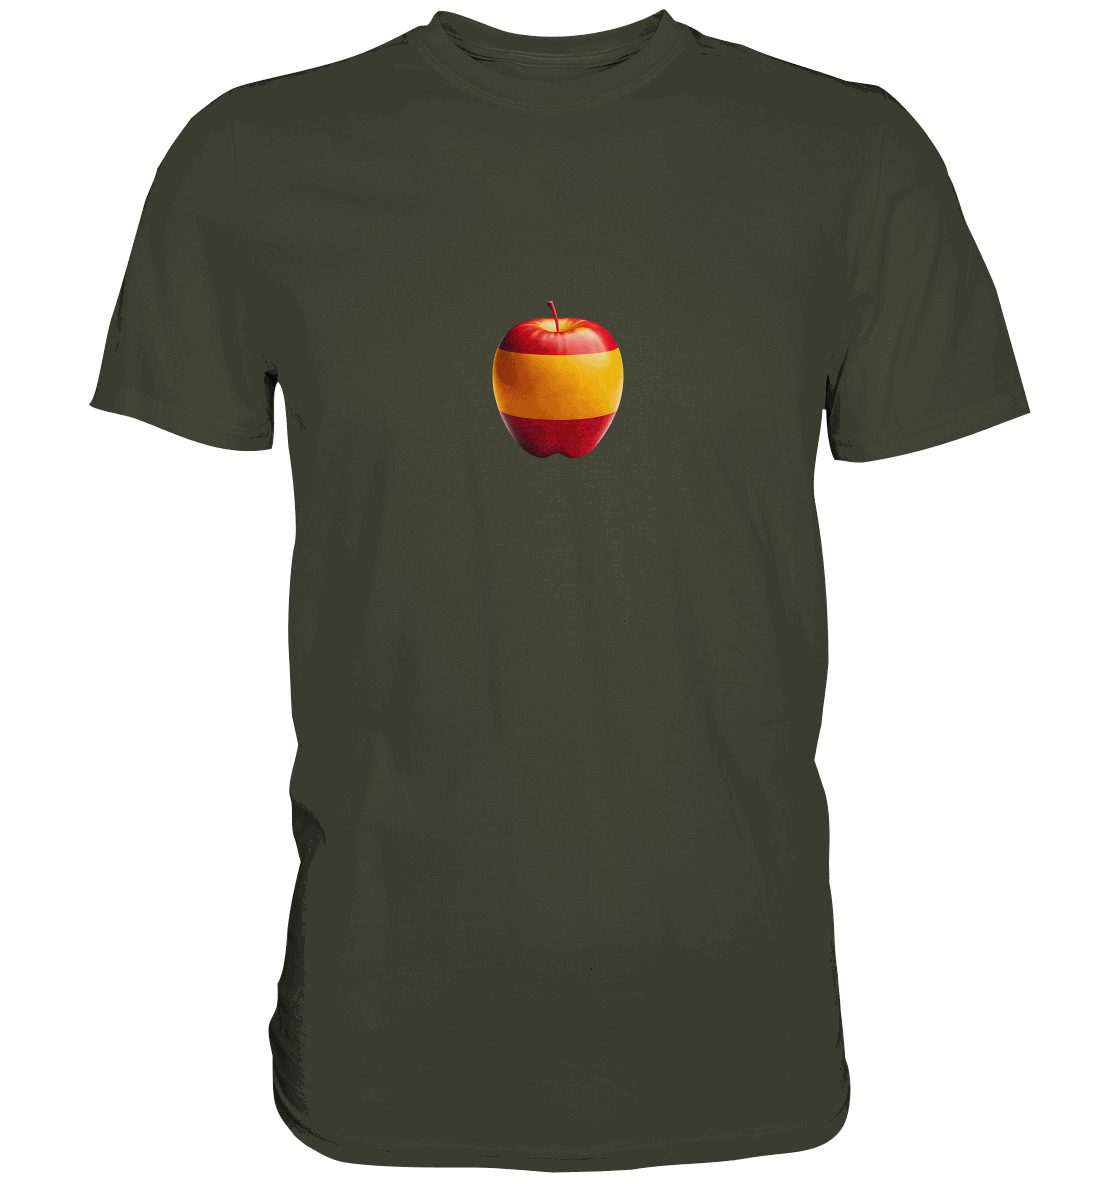 Fußball EM Spain Apfel - Premium Shirt